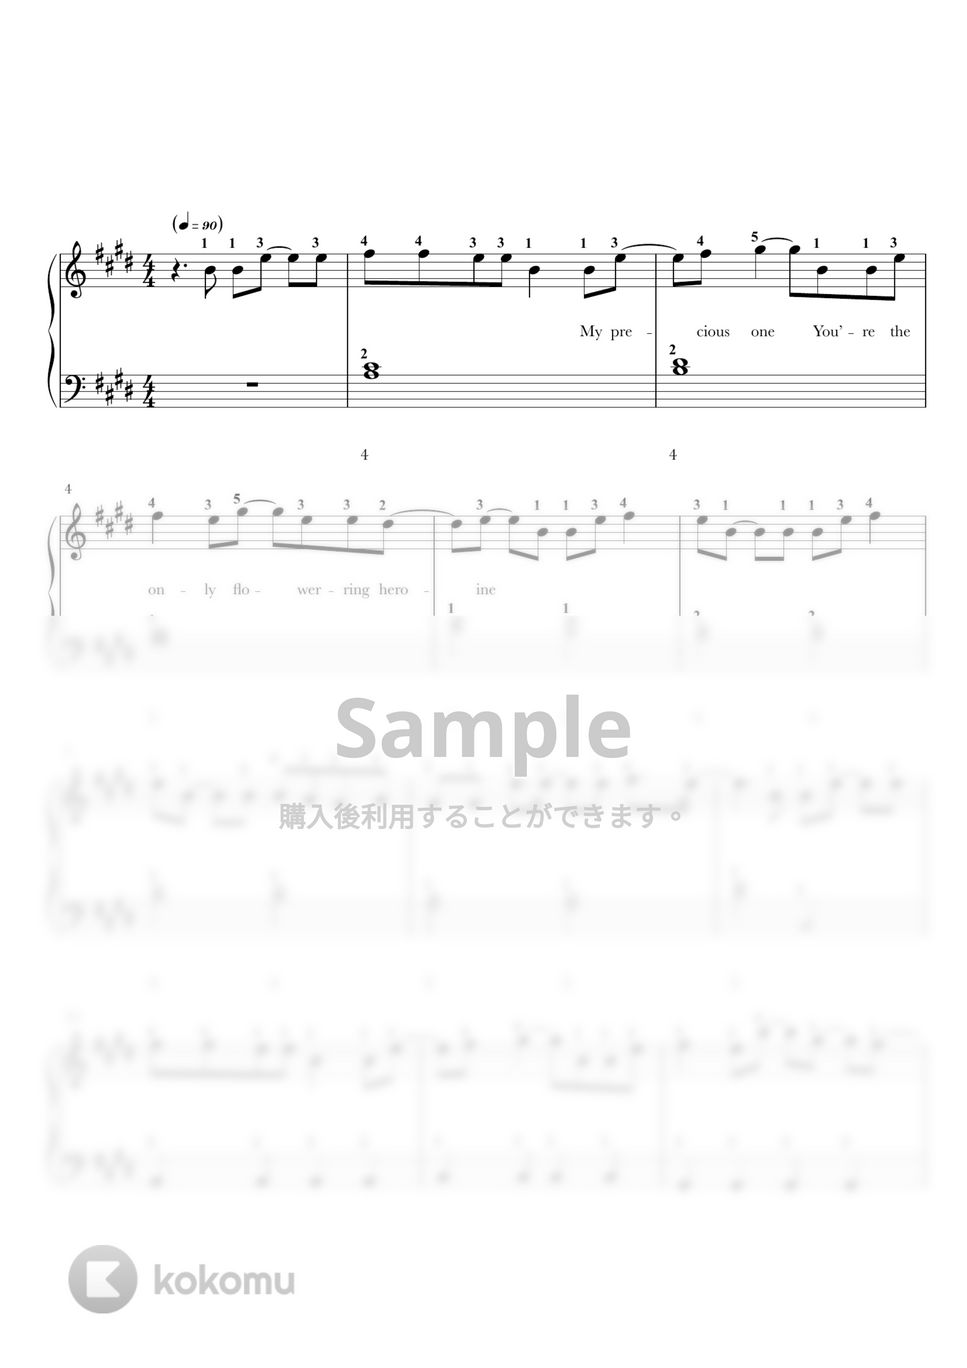 King & Prince - シンデレラガール (ピアノ両手 / 指番号 / 歌詞あり/ドレミ付き) by anytimepiano